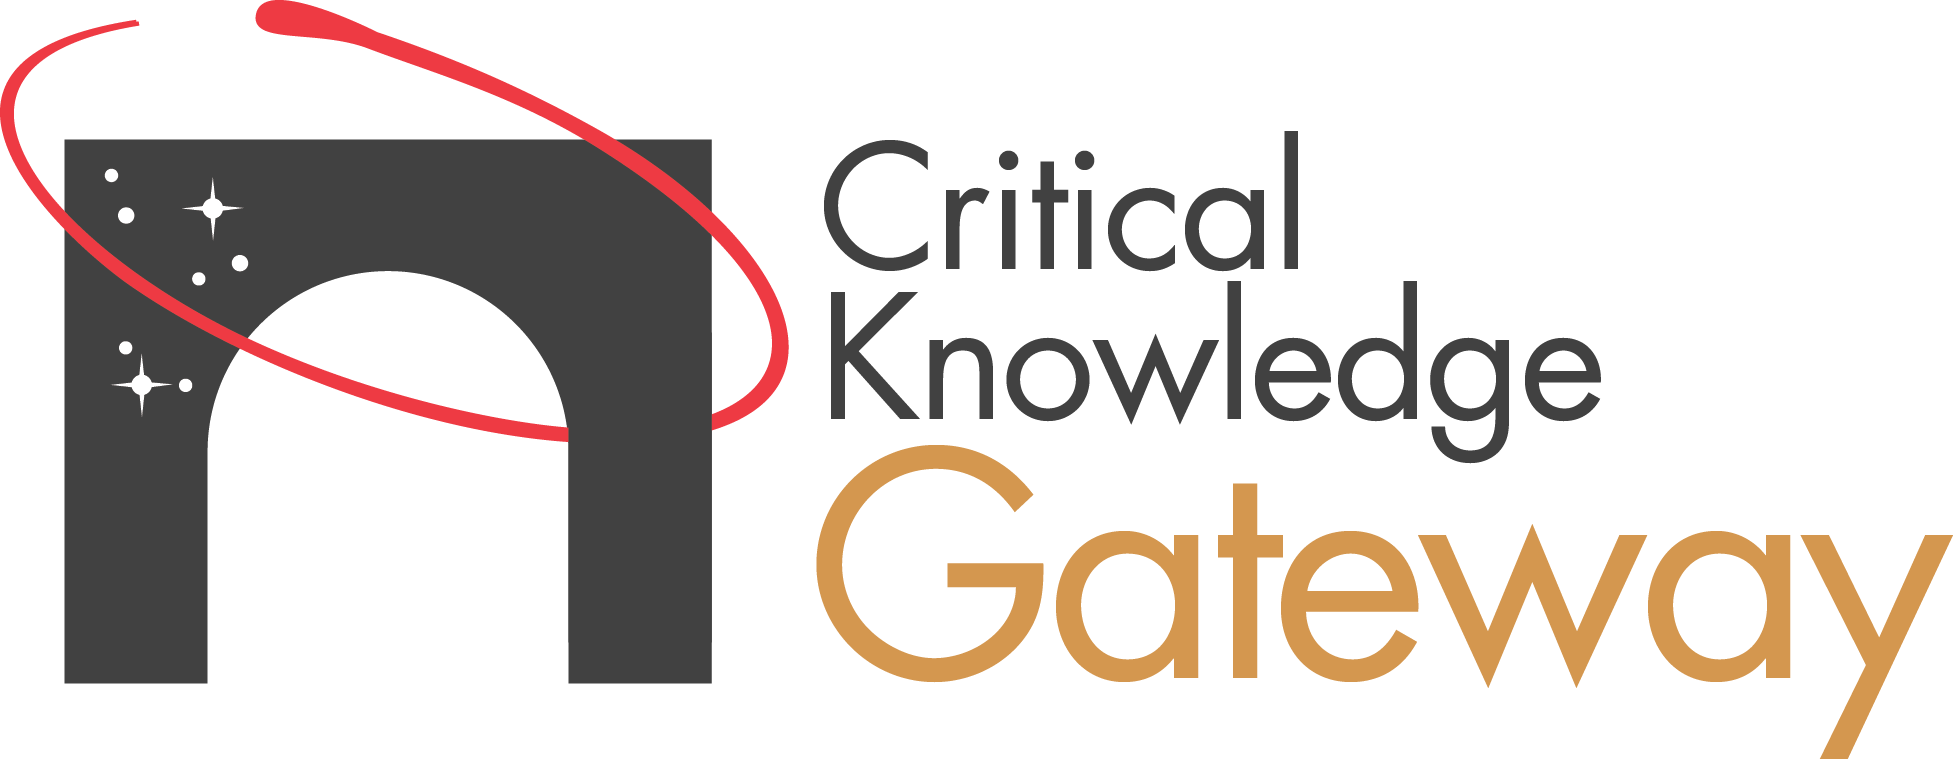 Gateway Logo - Critical Knowledge Gateway | APPEL Knowledge Services